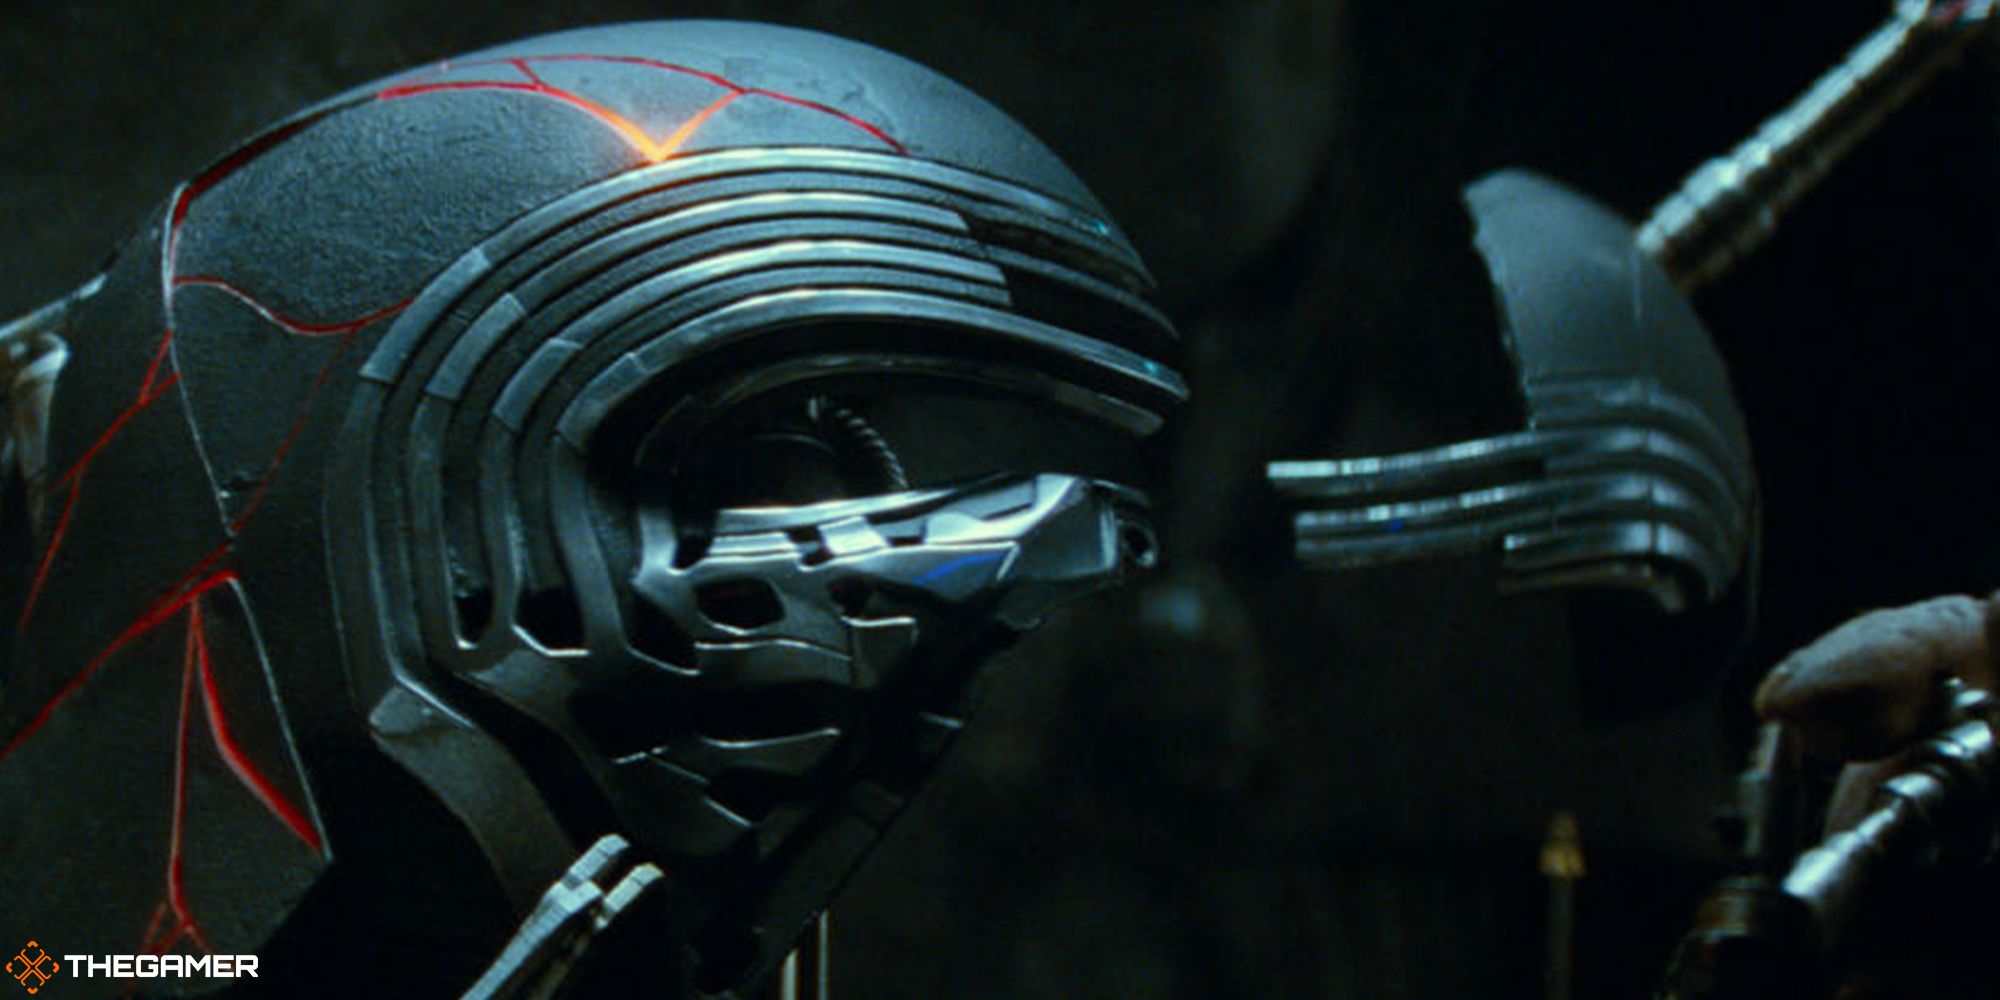 Star Wars - Kylo Ren's helmet being remade